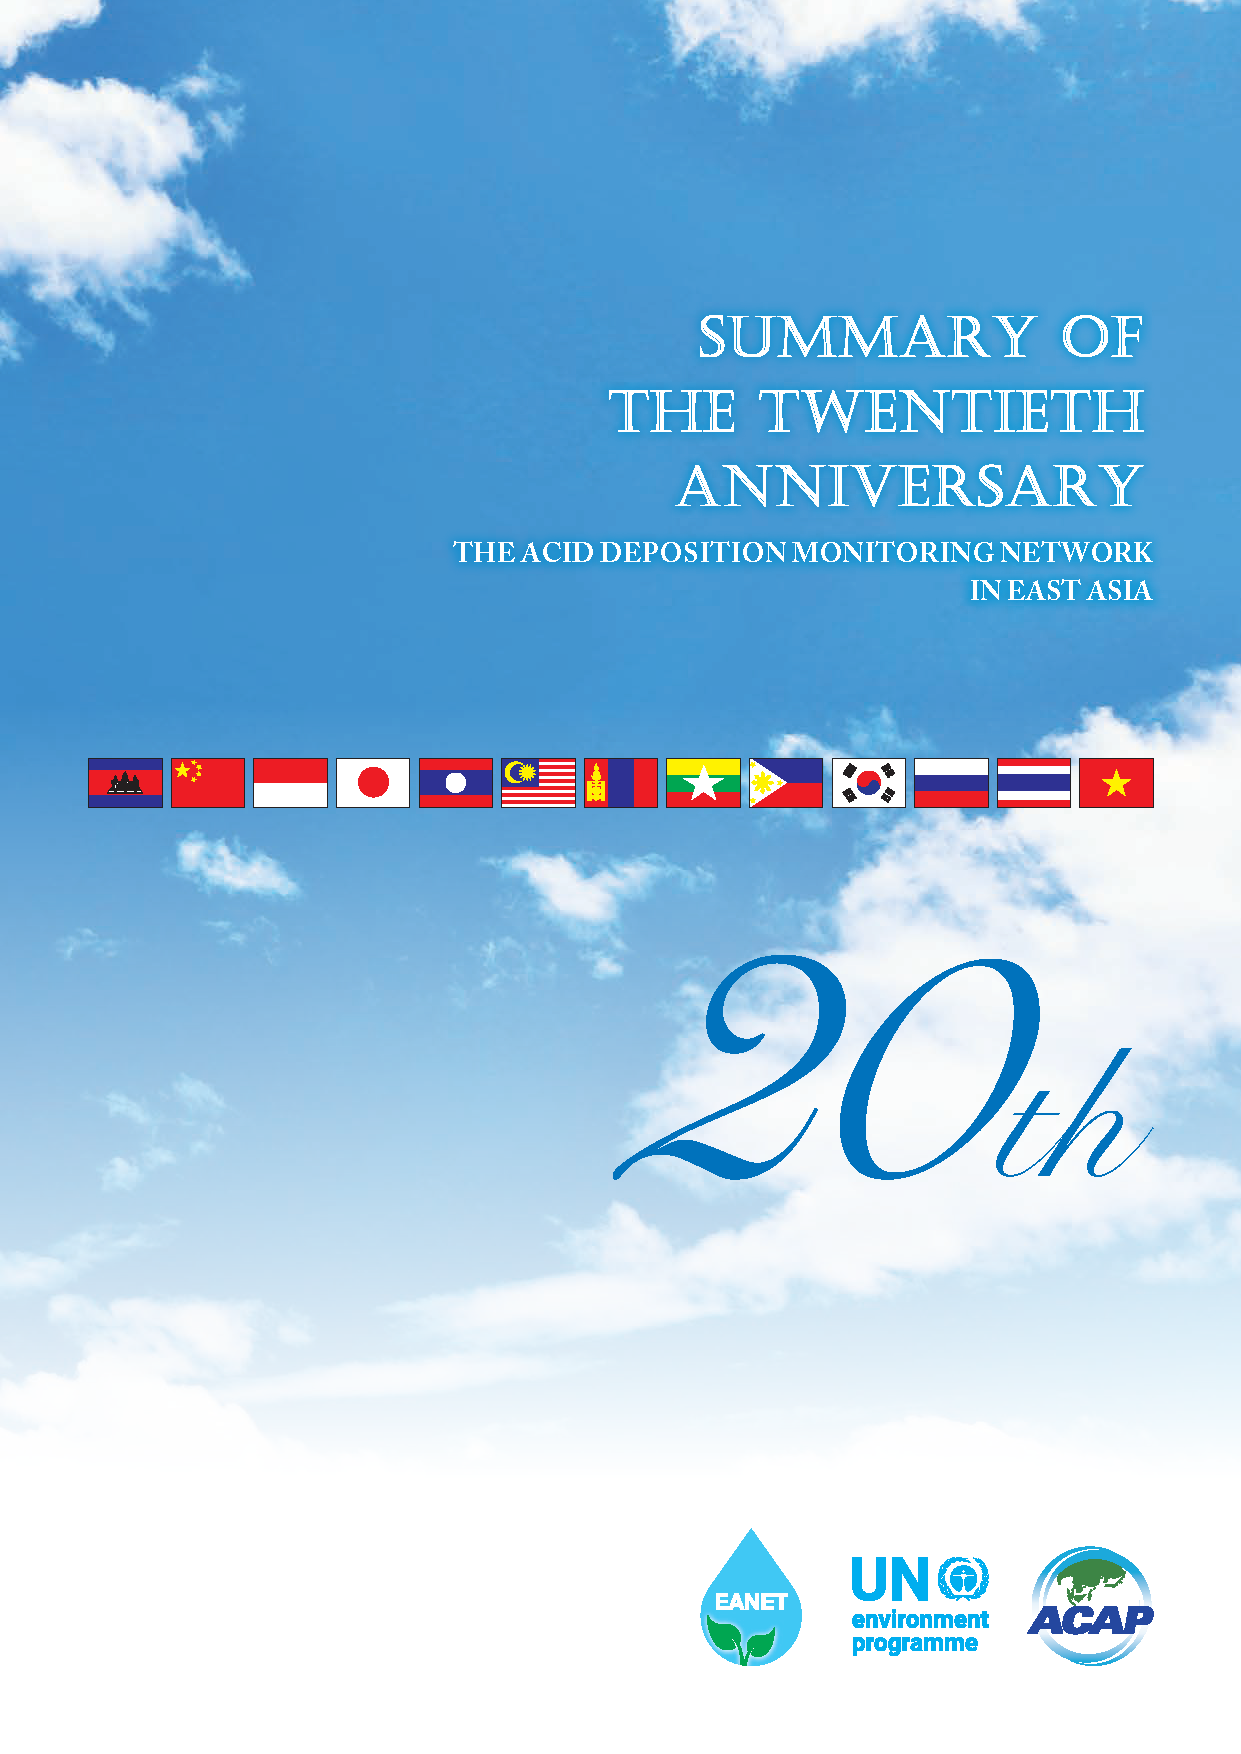 Summary of the Twentieth Anniversary of the EANET